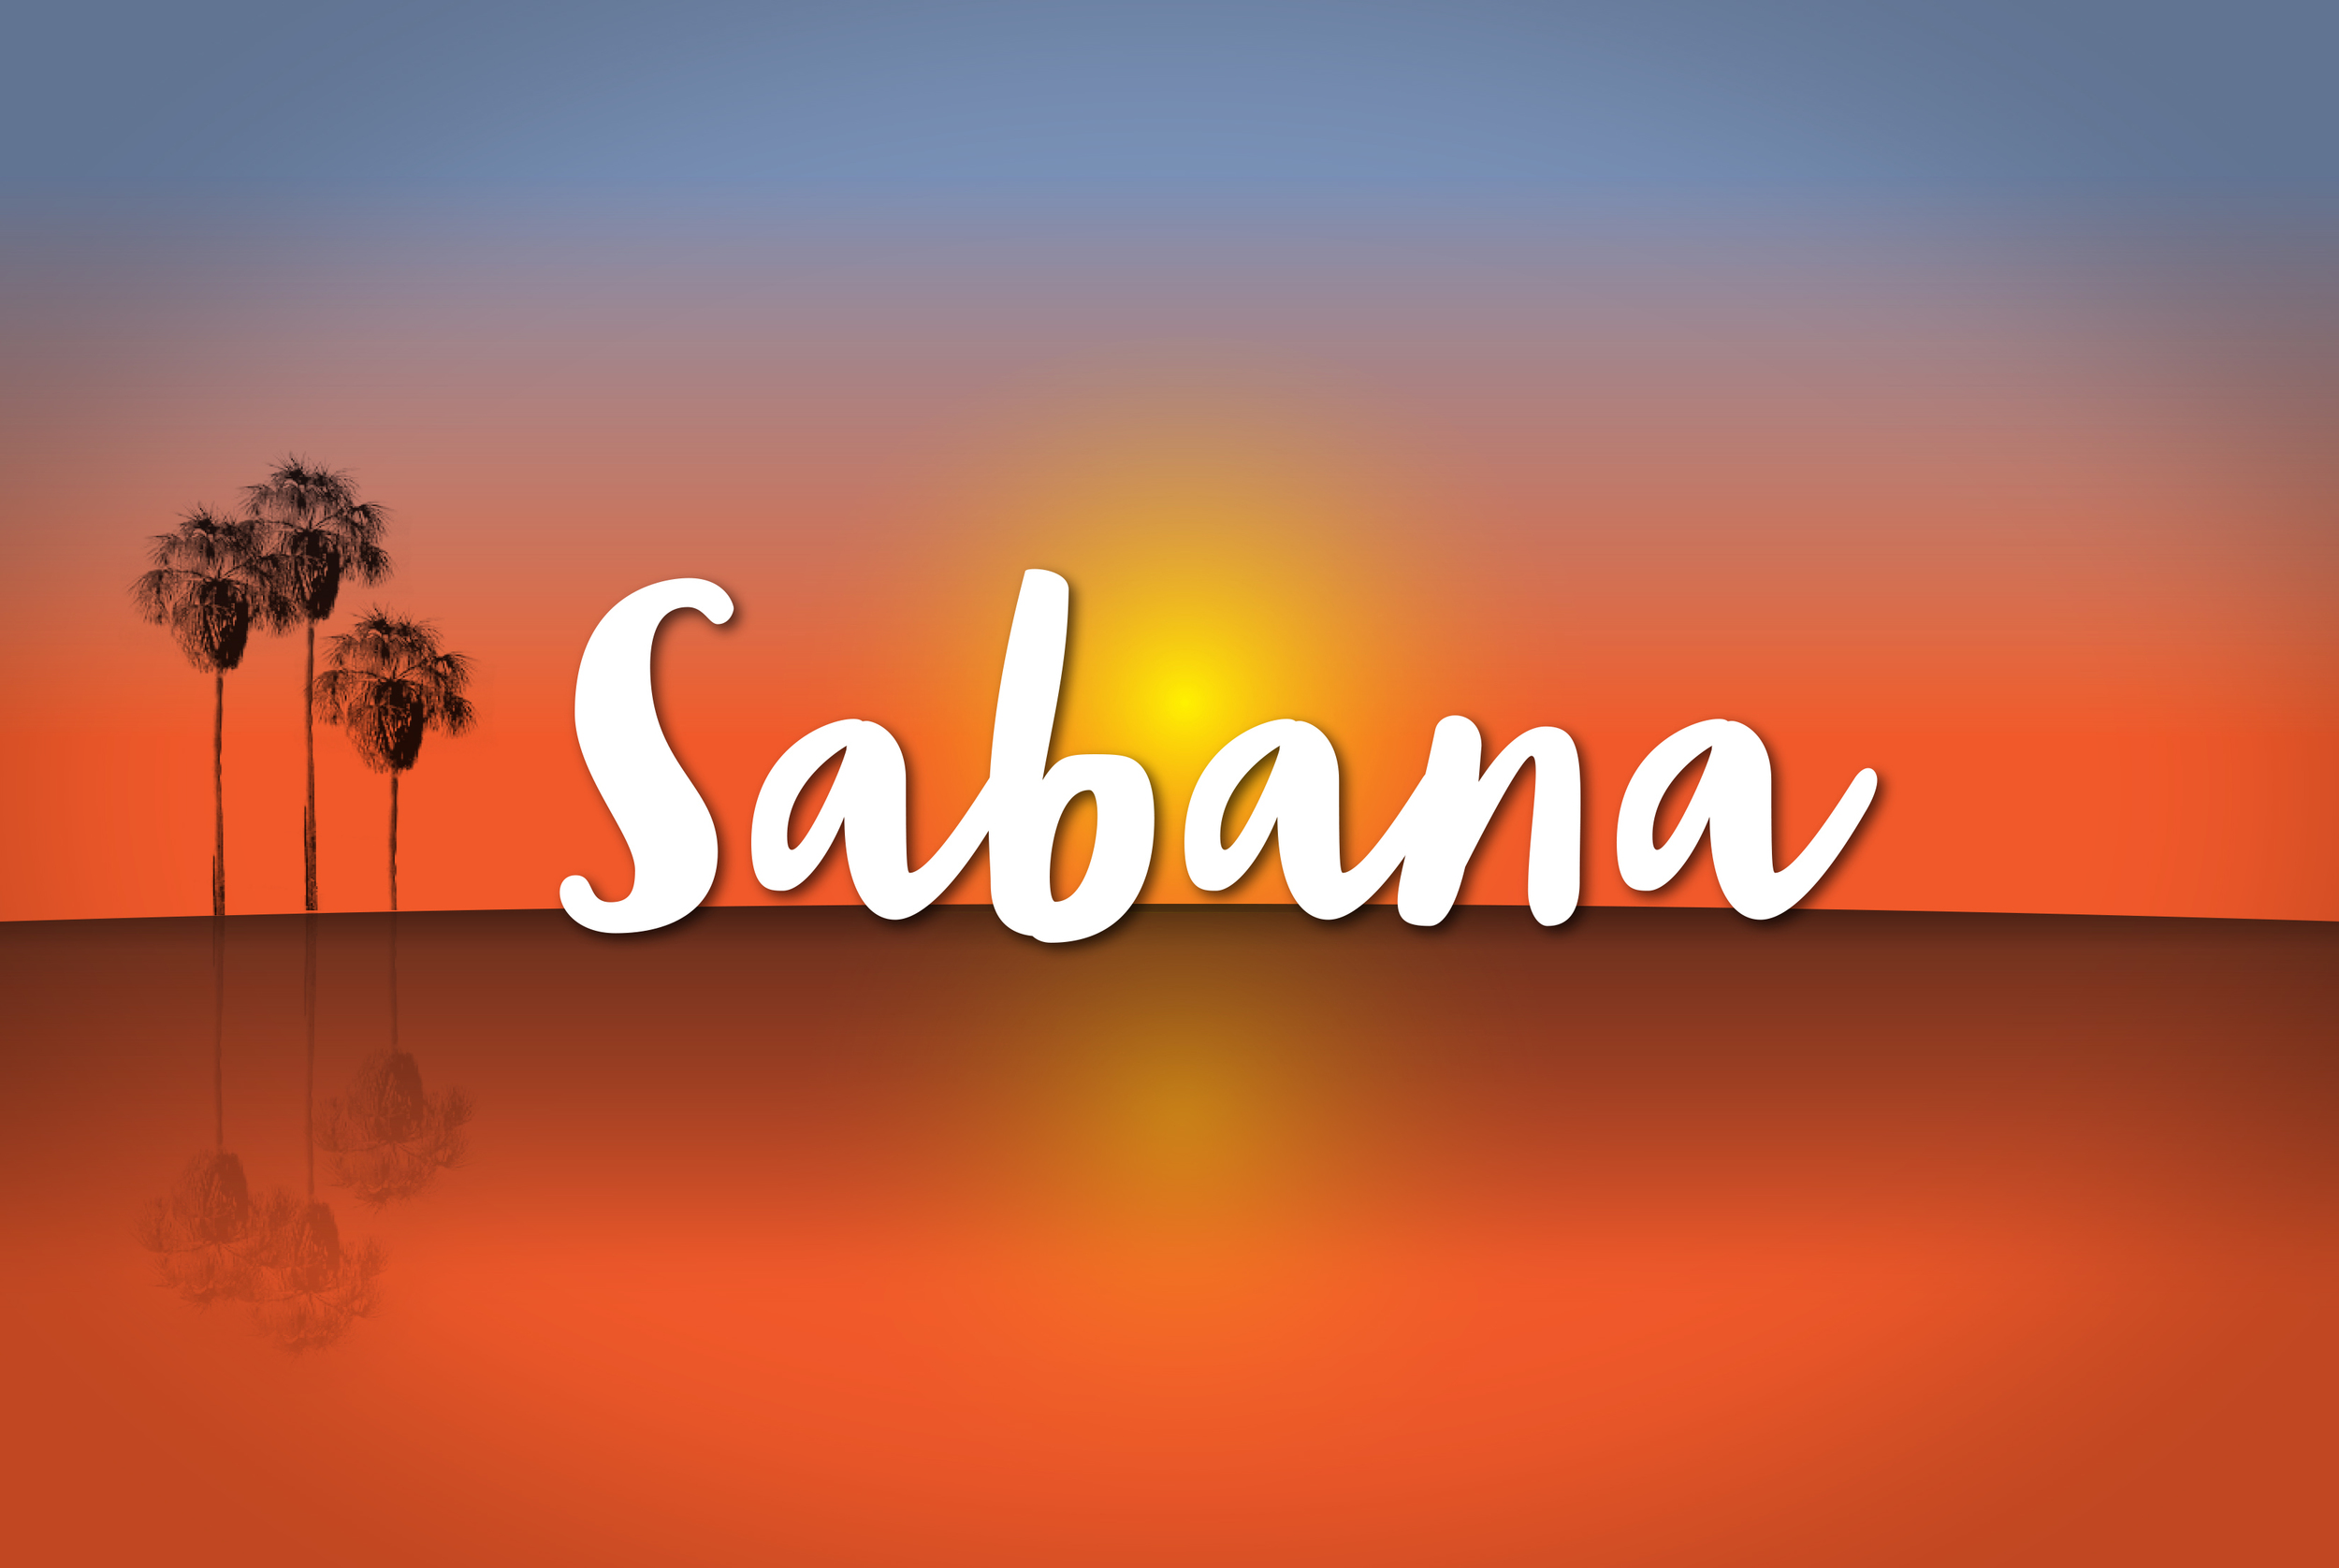 Sabana logo illustrated